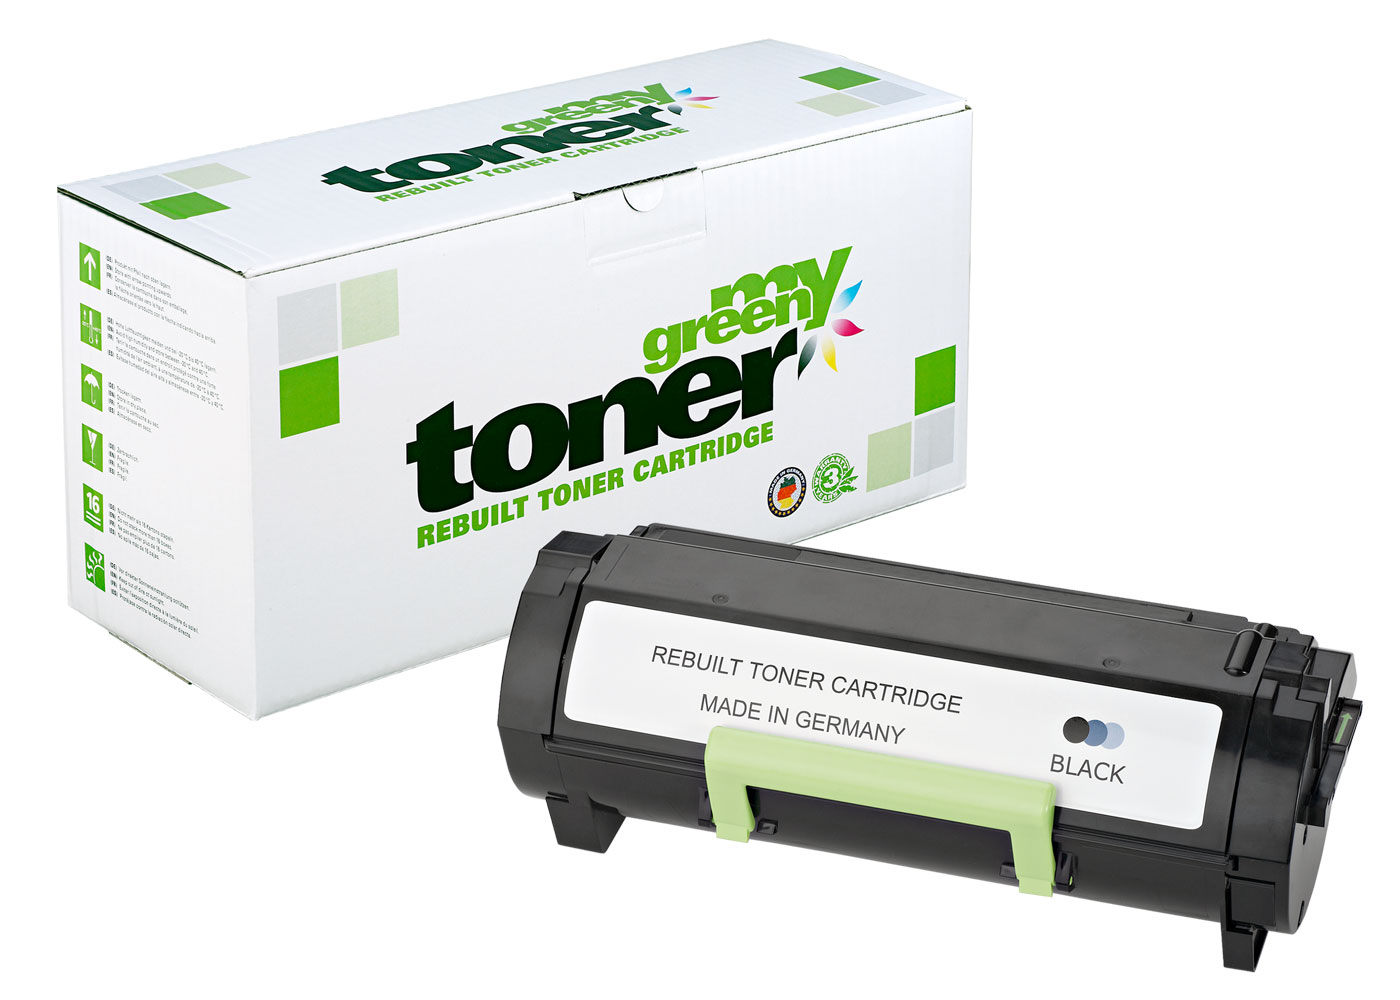 Rebuilt Toner Cartridge for Lexmark MS321/421, MX321/421 a. o.